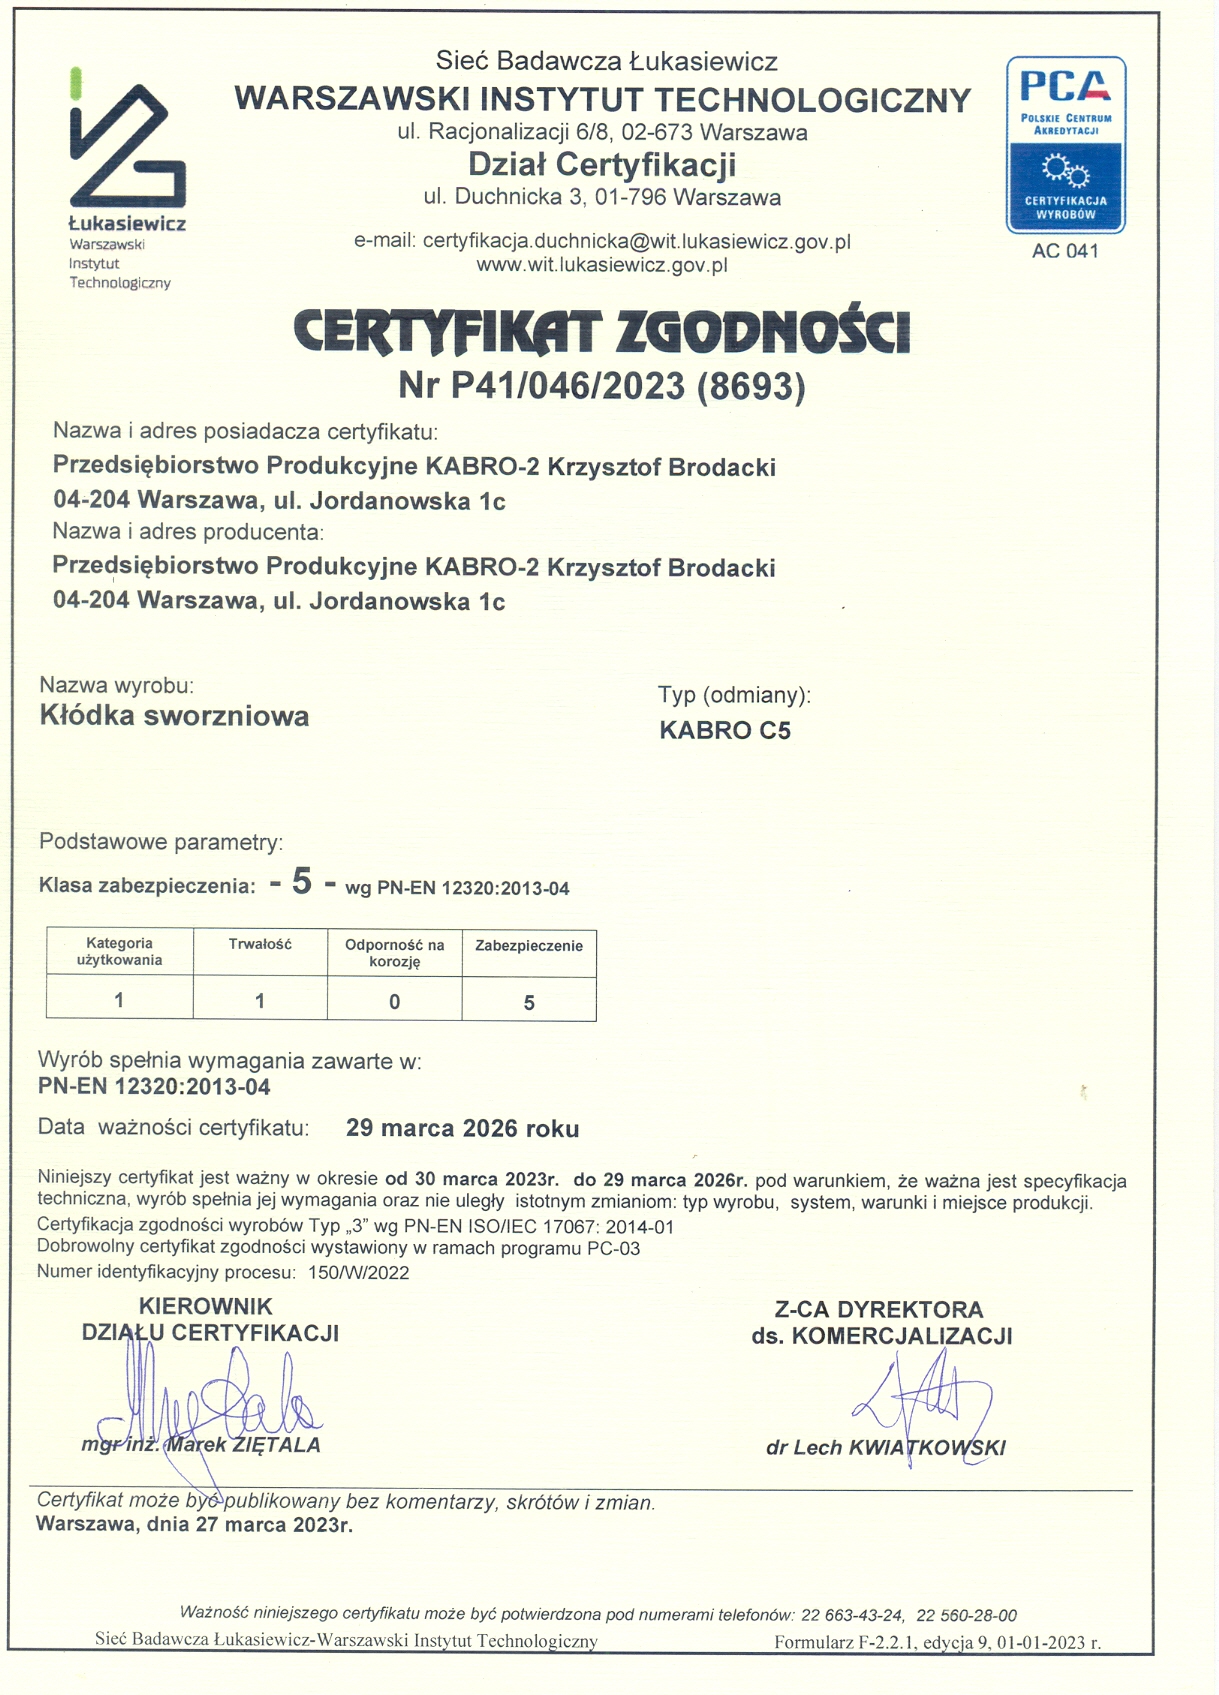 Certyfikat klasy 5. dla kłódki KABRO C5